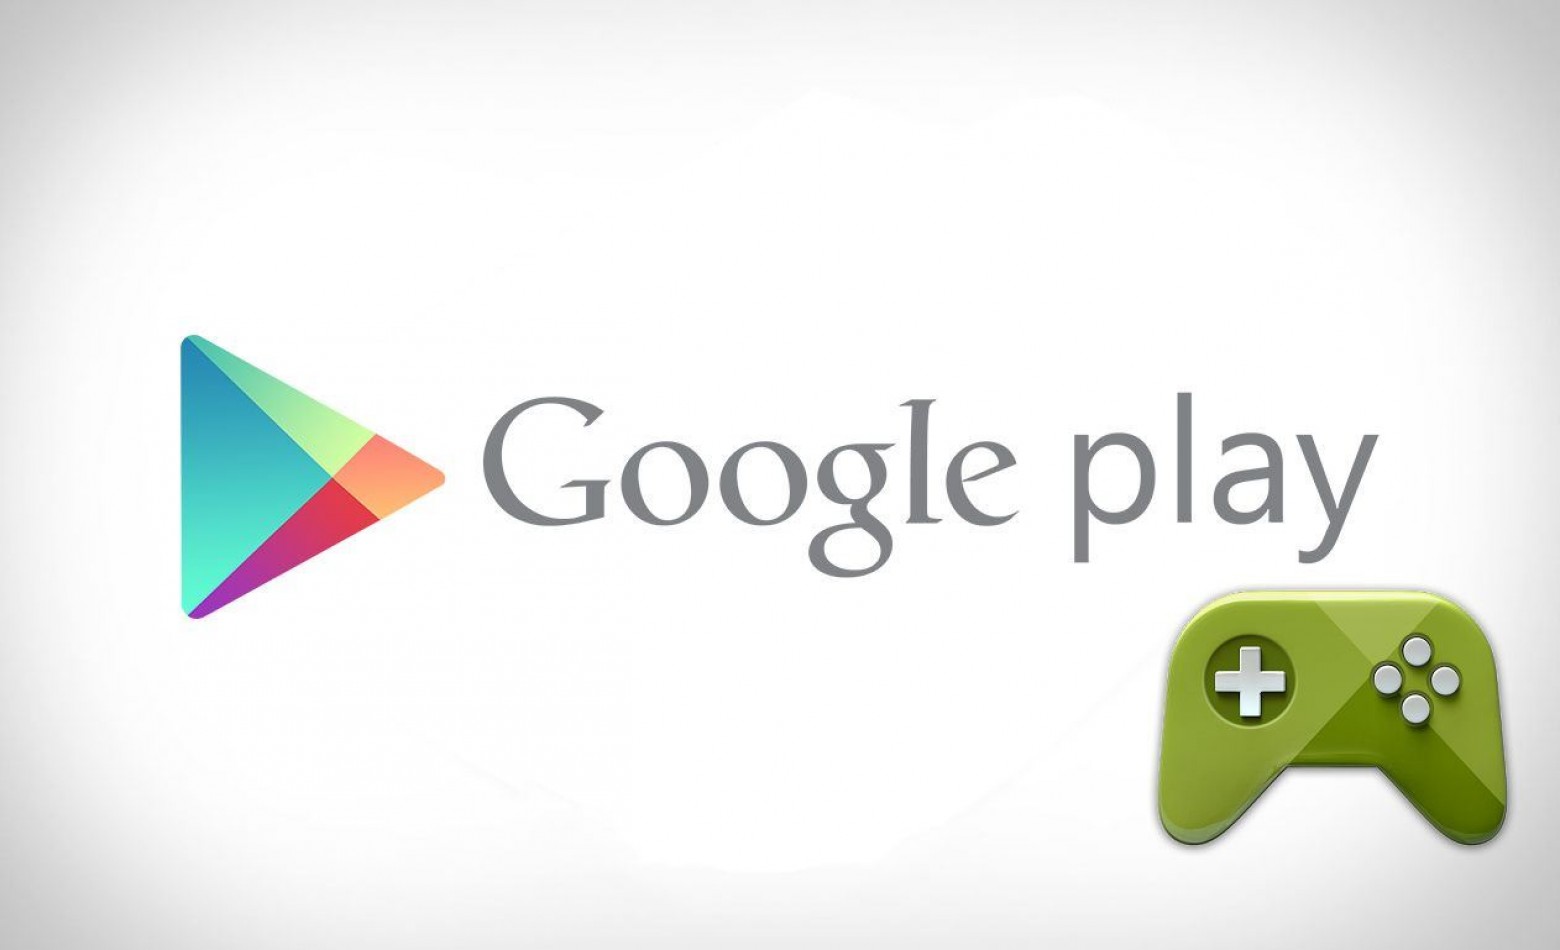 Google possibilita multiplayer integrado entre iOS e Android